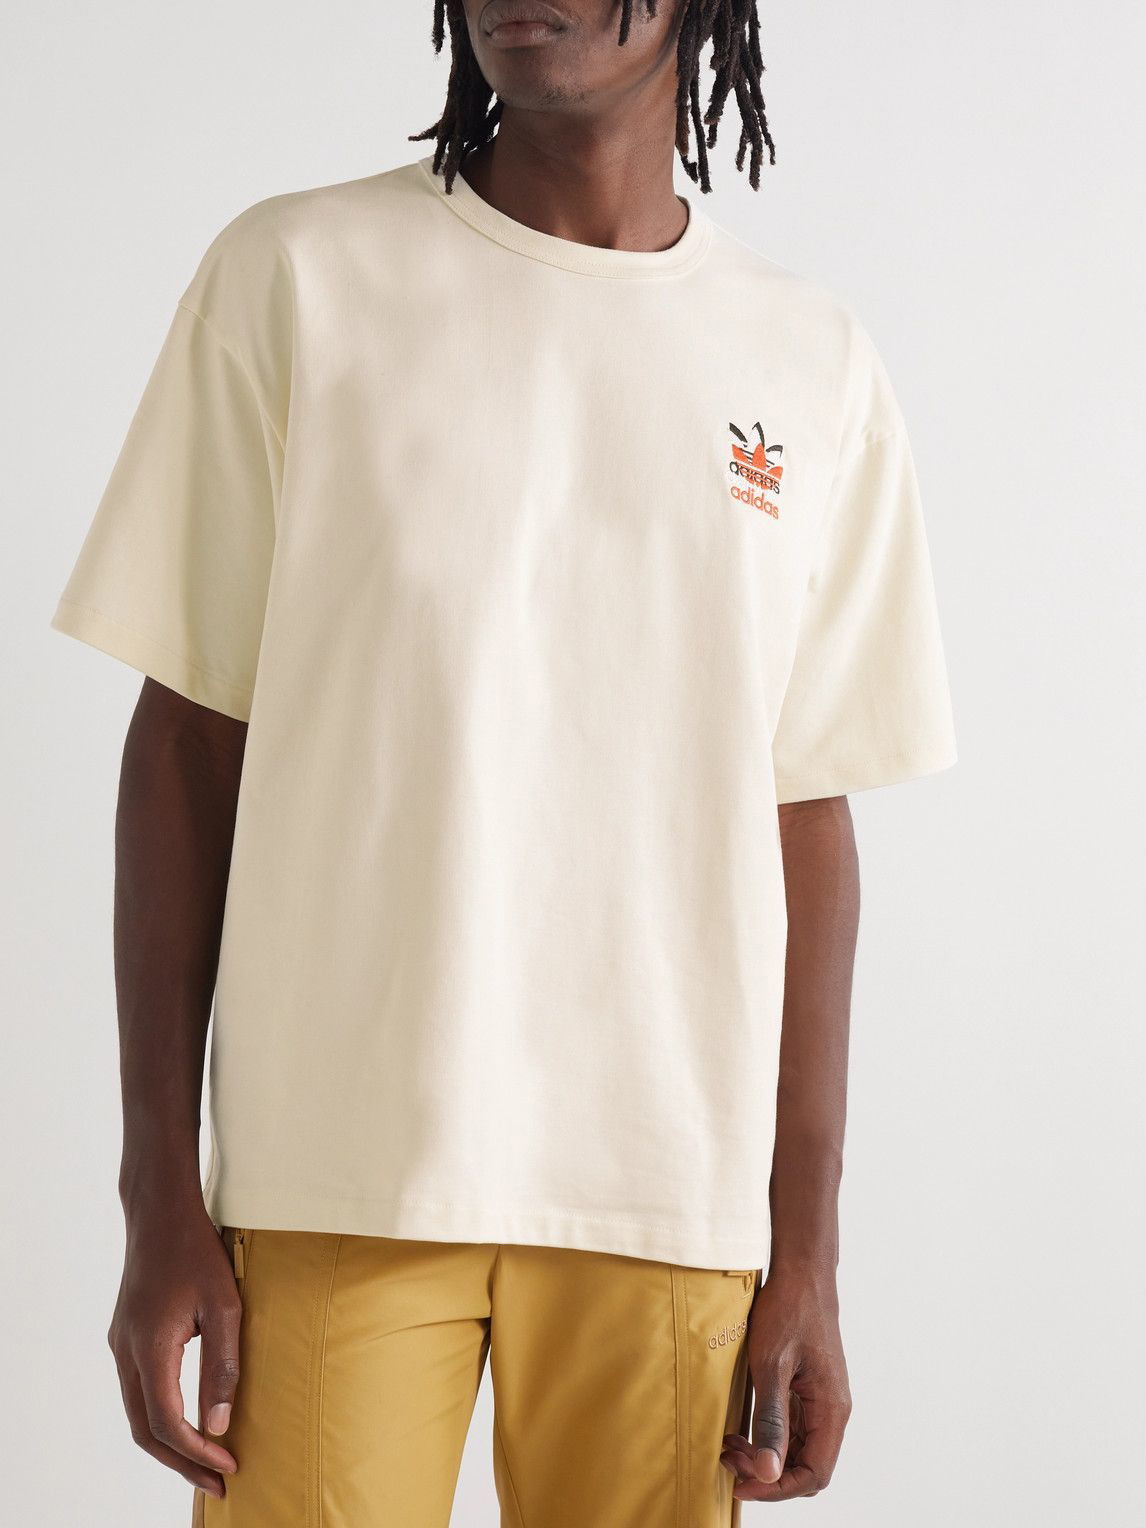 Kenzo Kids embroidered-logo long-sleeve sweatshirt - Neutrals